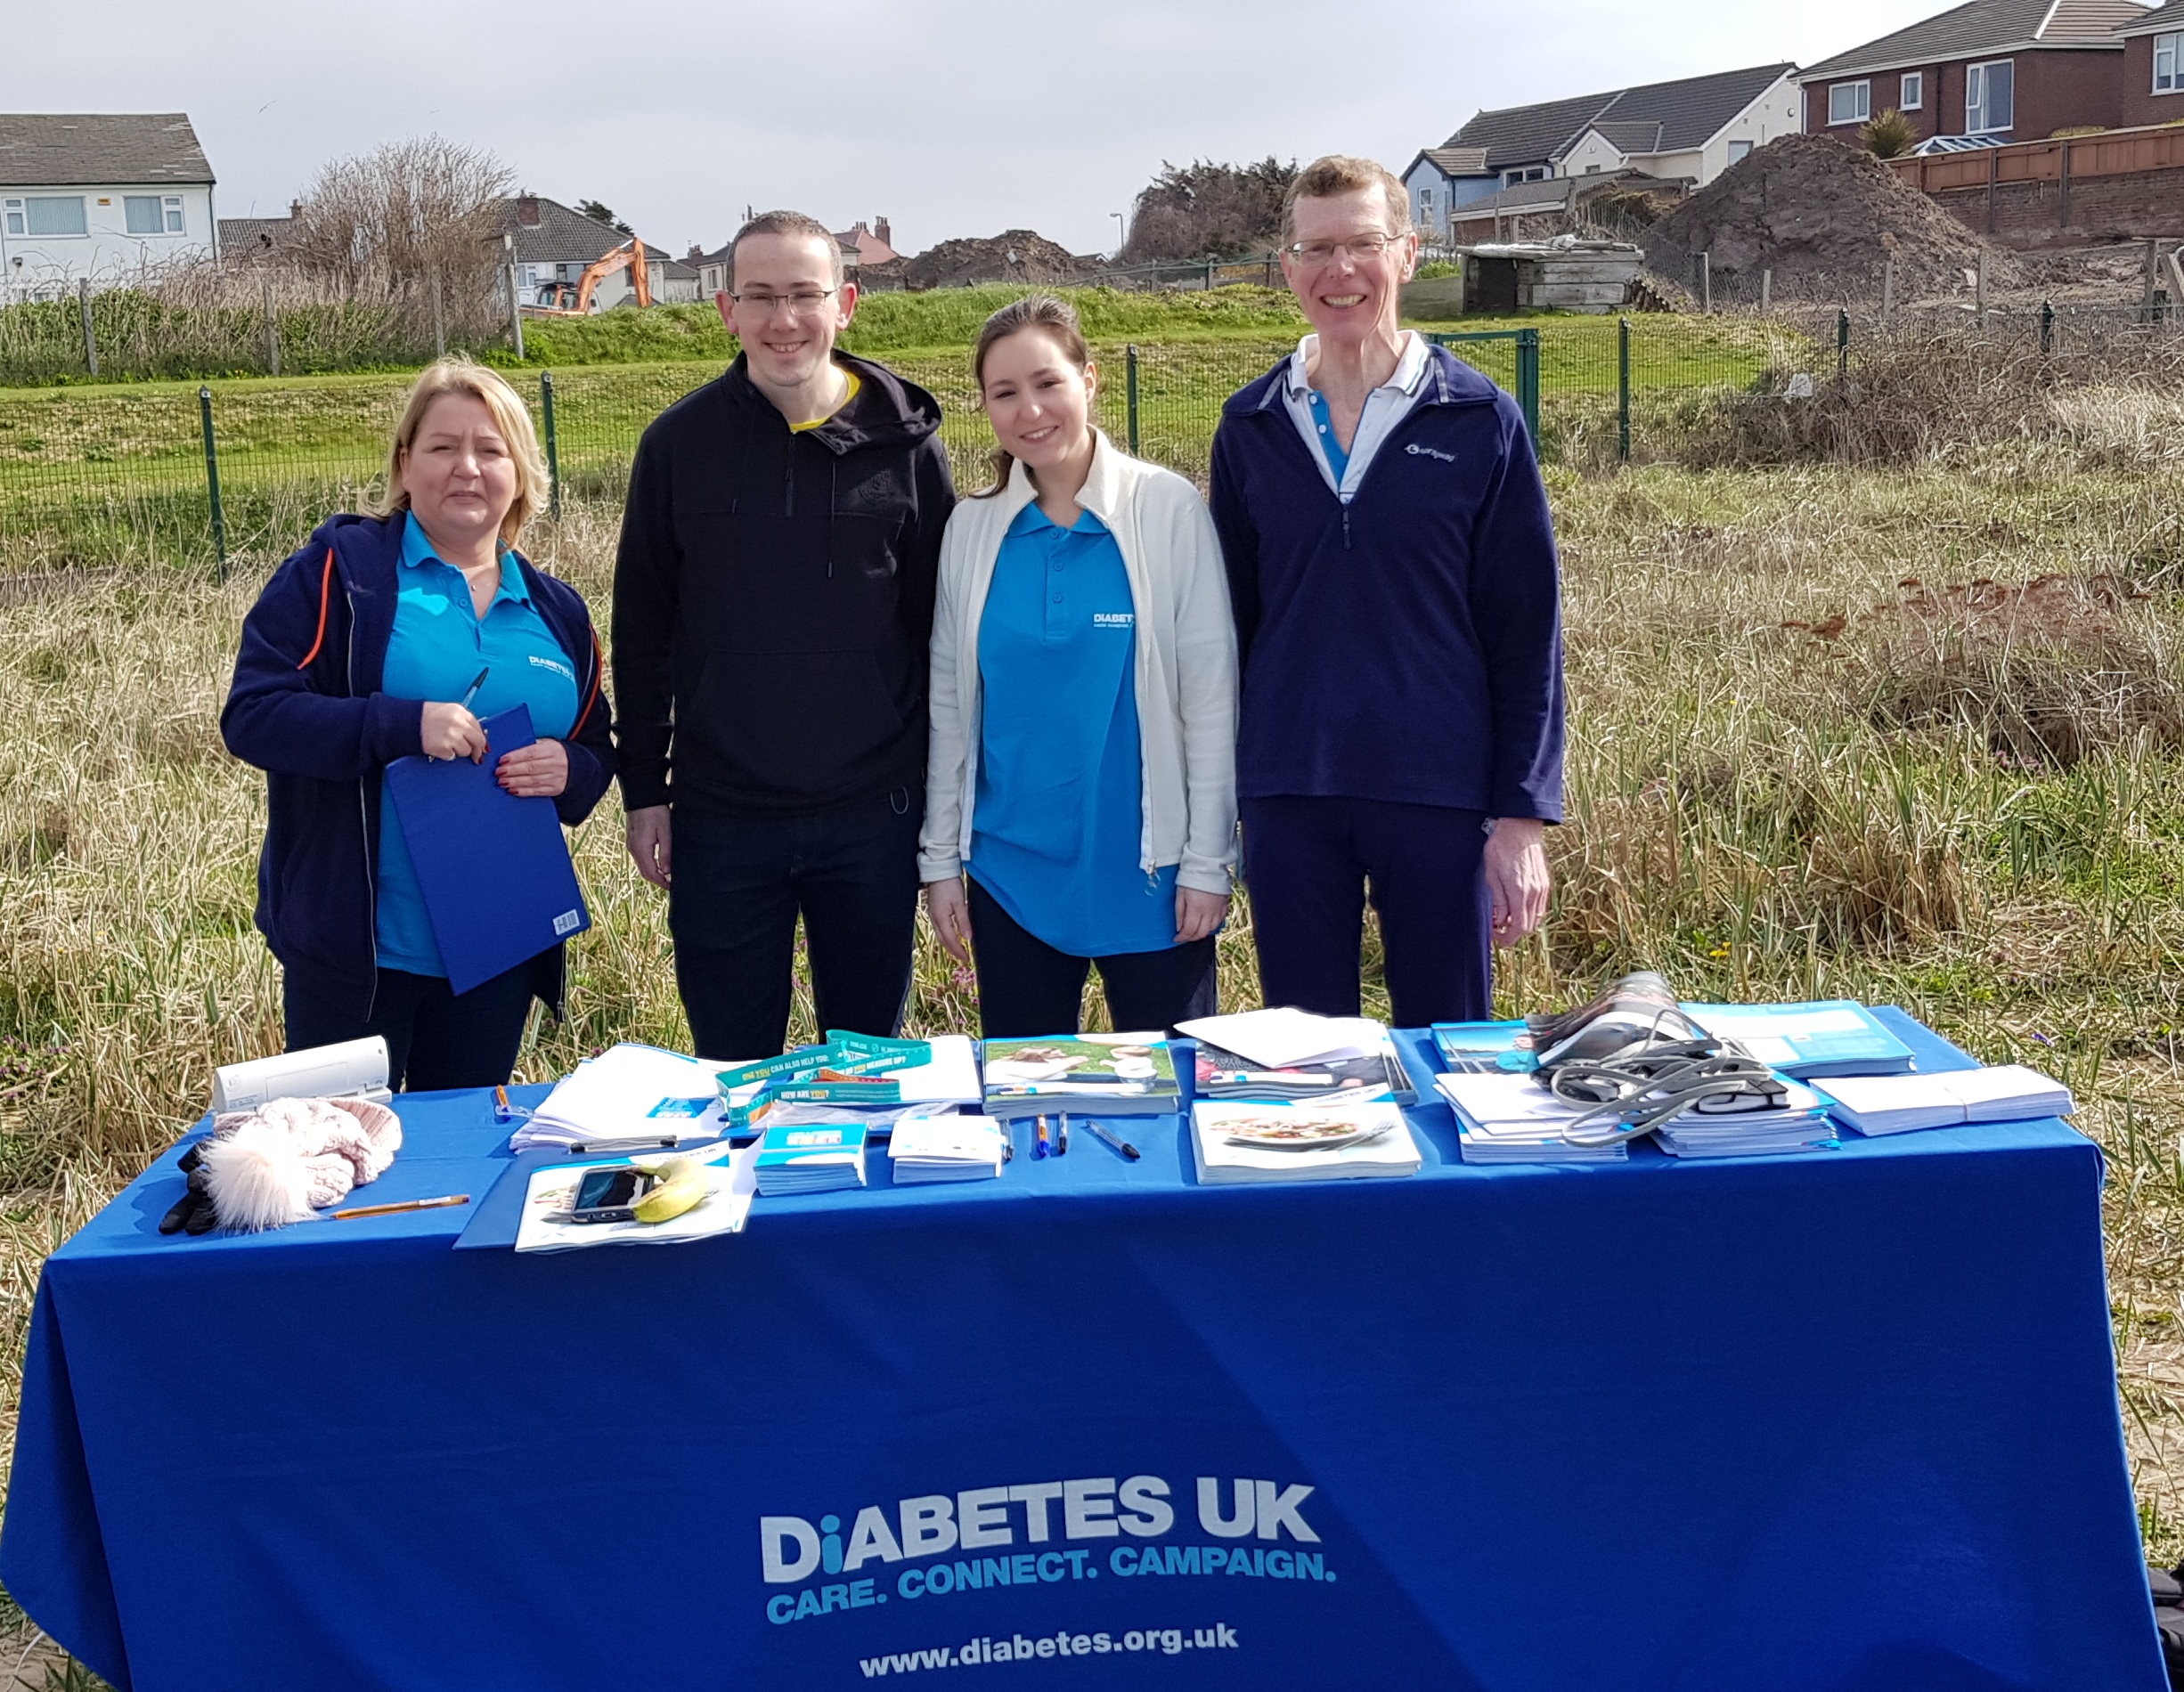 Local park run events promote Type 2 diabetes prevention